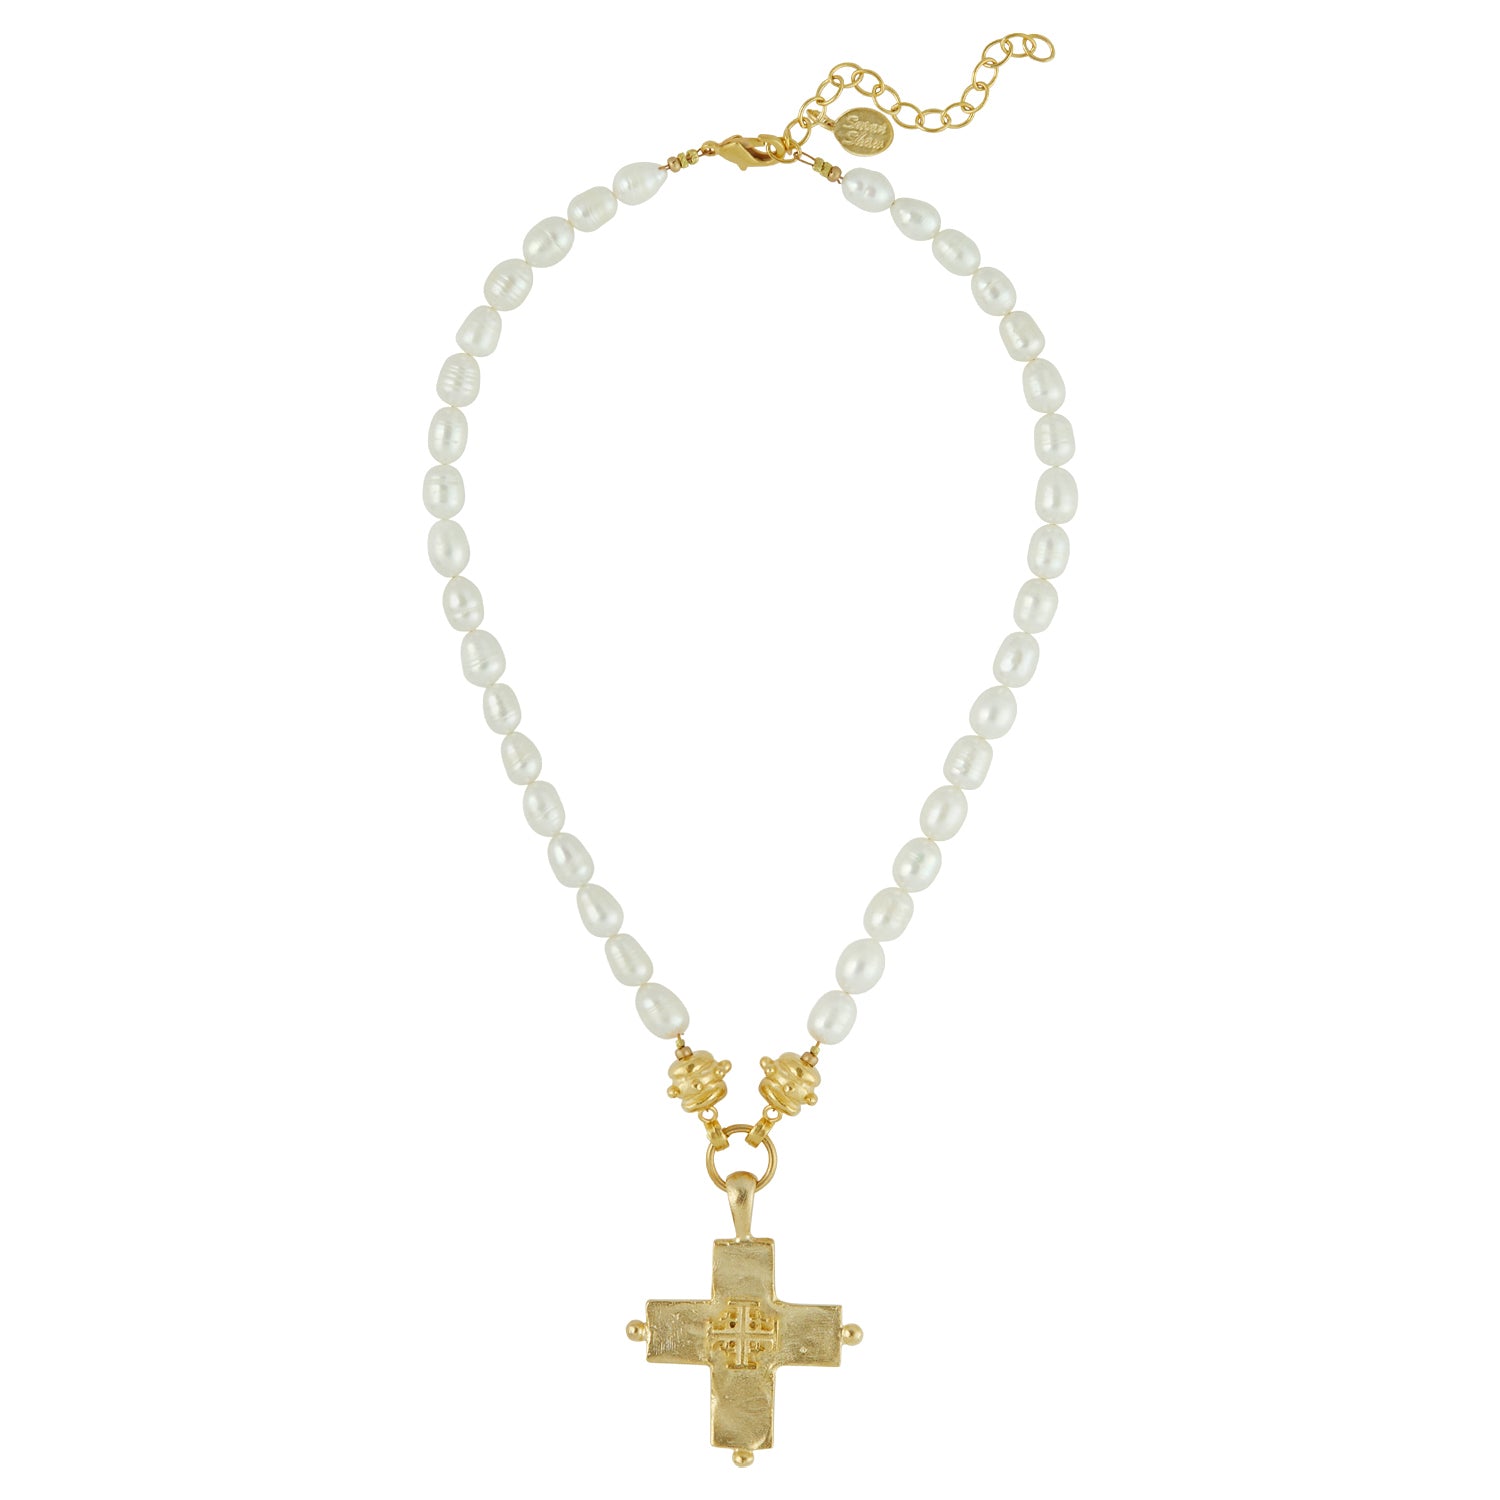 Susan Shaw Handcast Gold Jerusalem Cross Genuine Freshwater Pearl Necklace